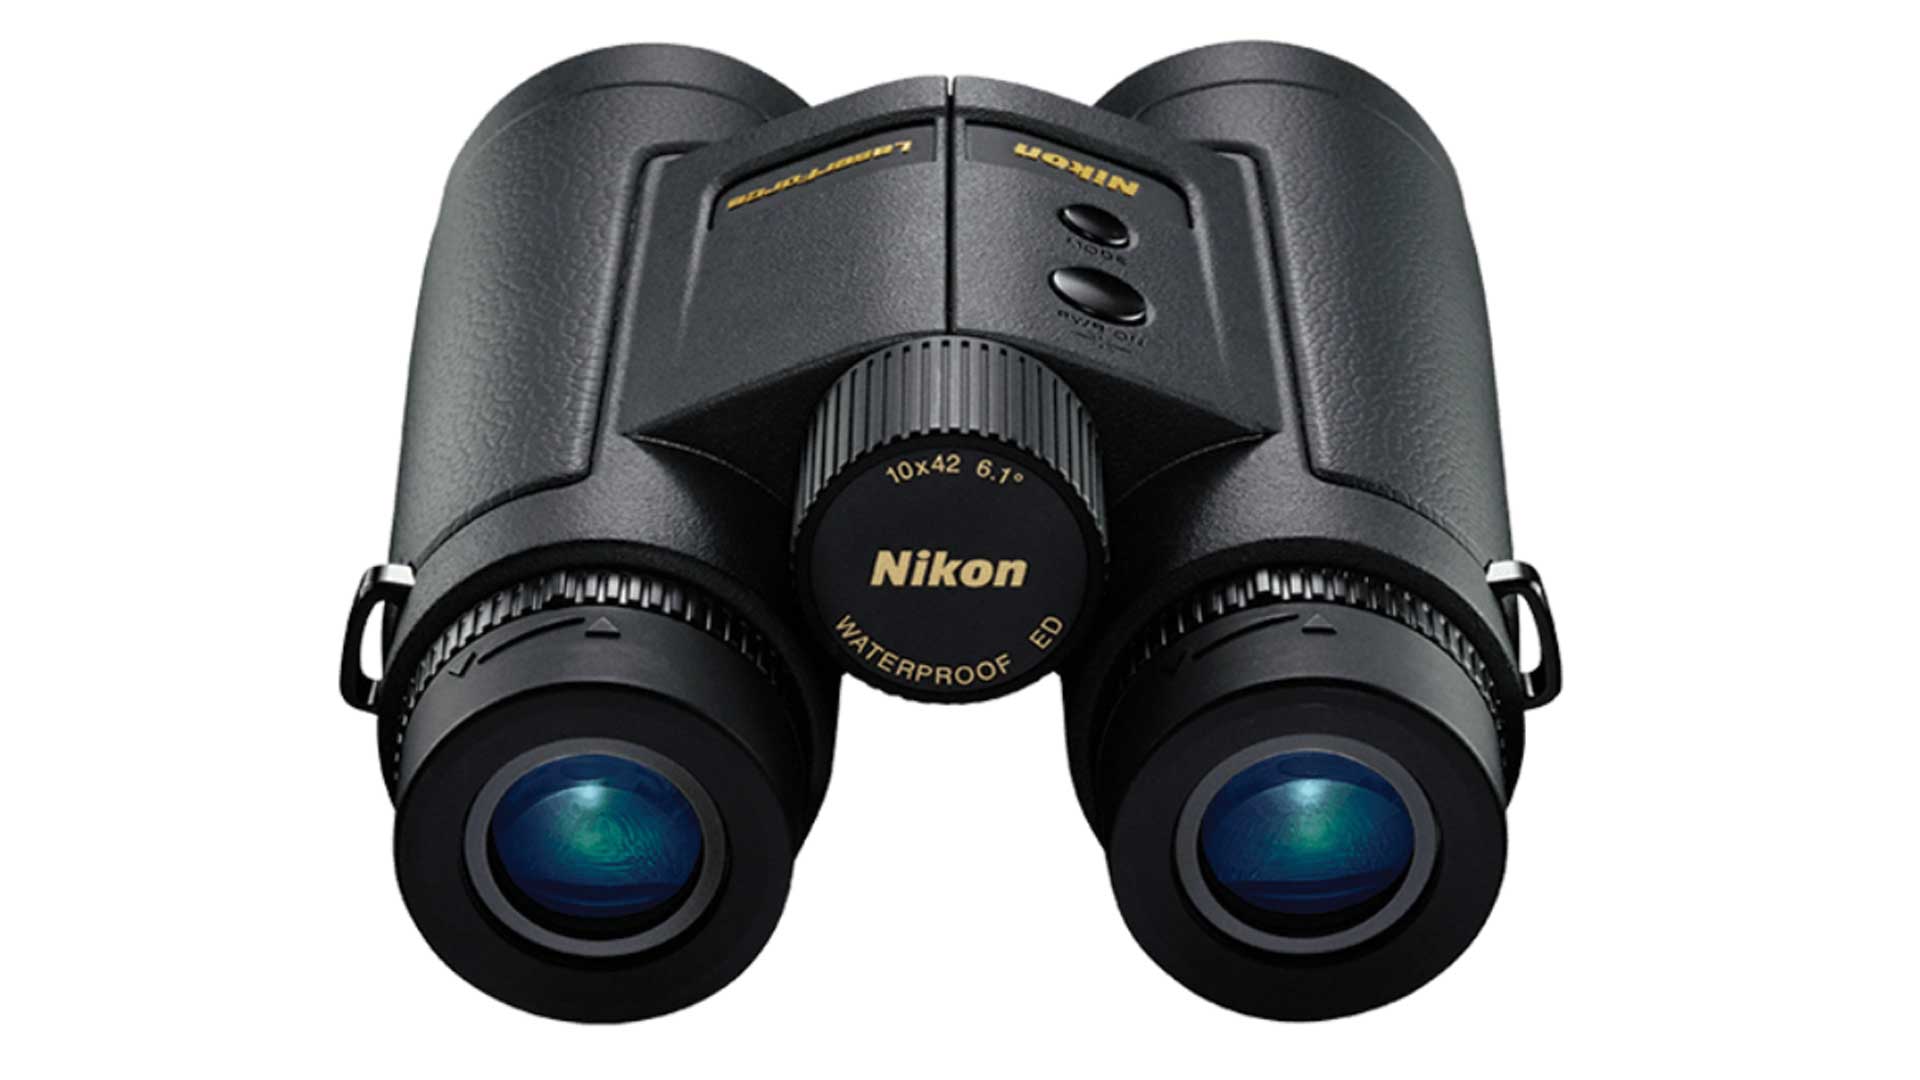 Nikon laserforce rangefinder binoculars